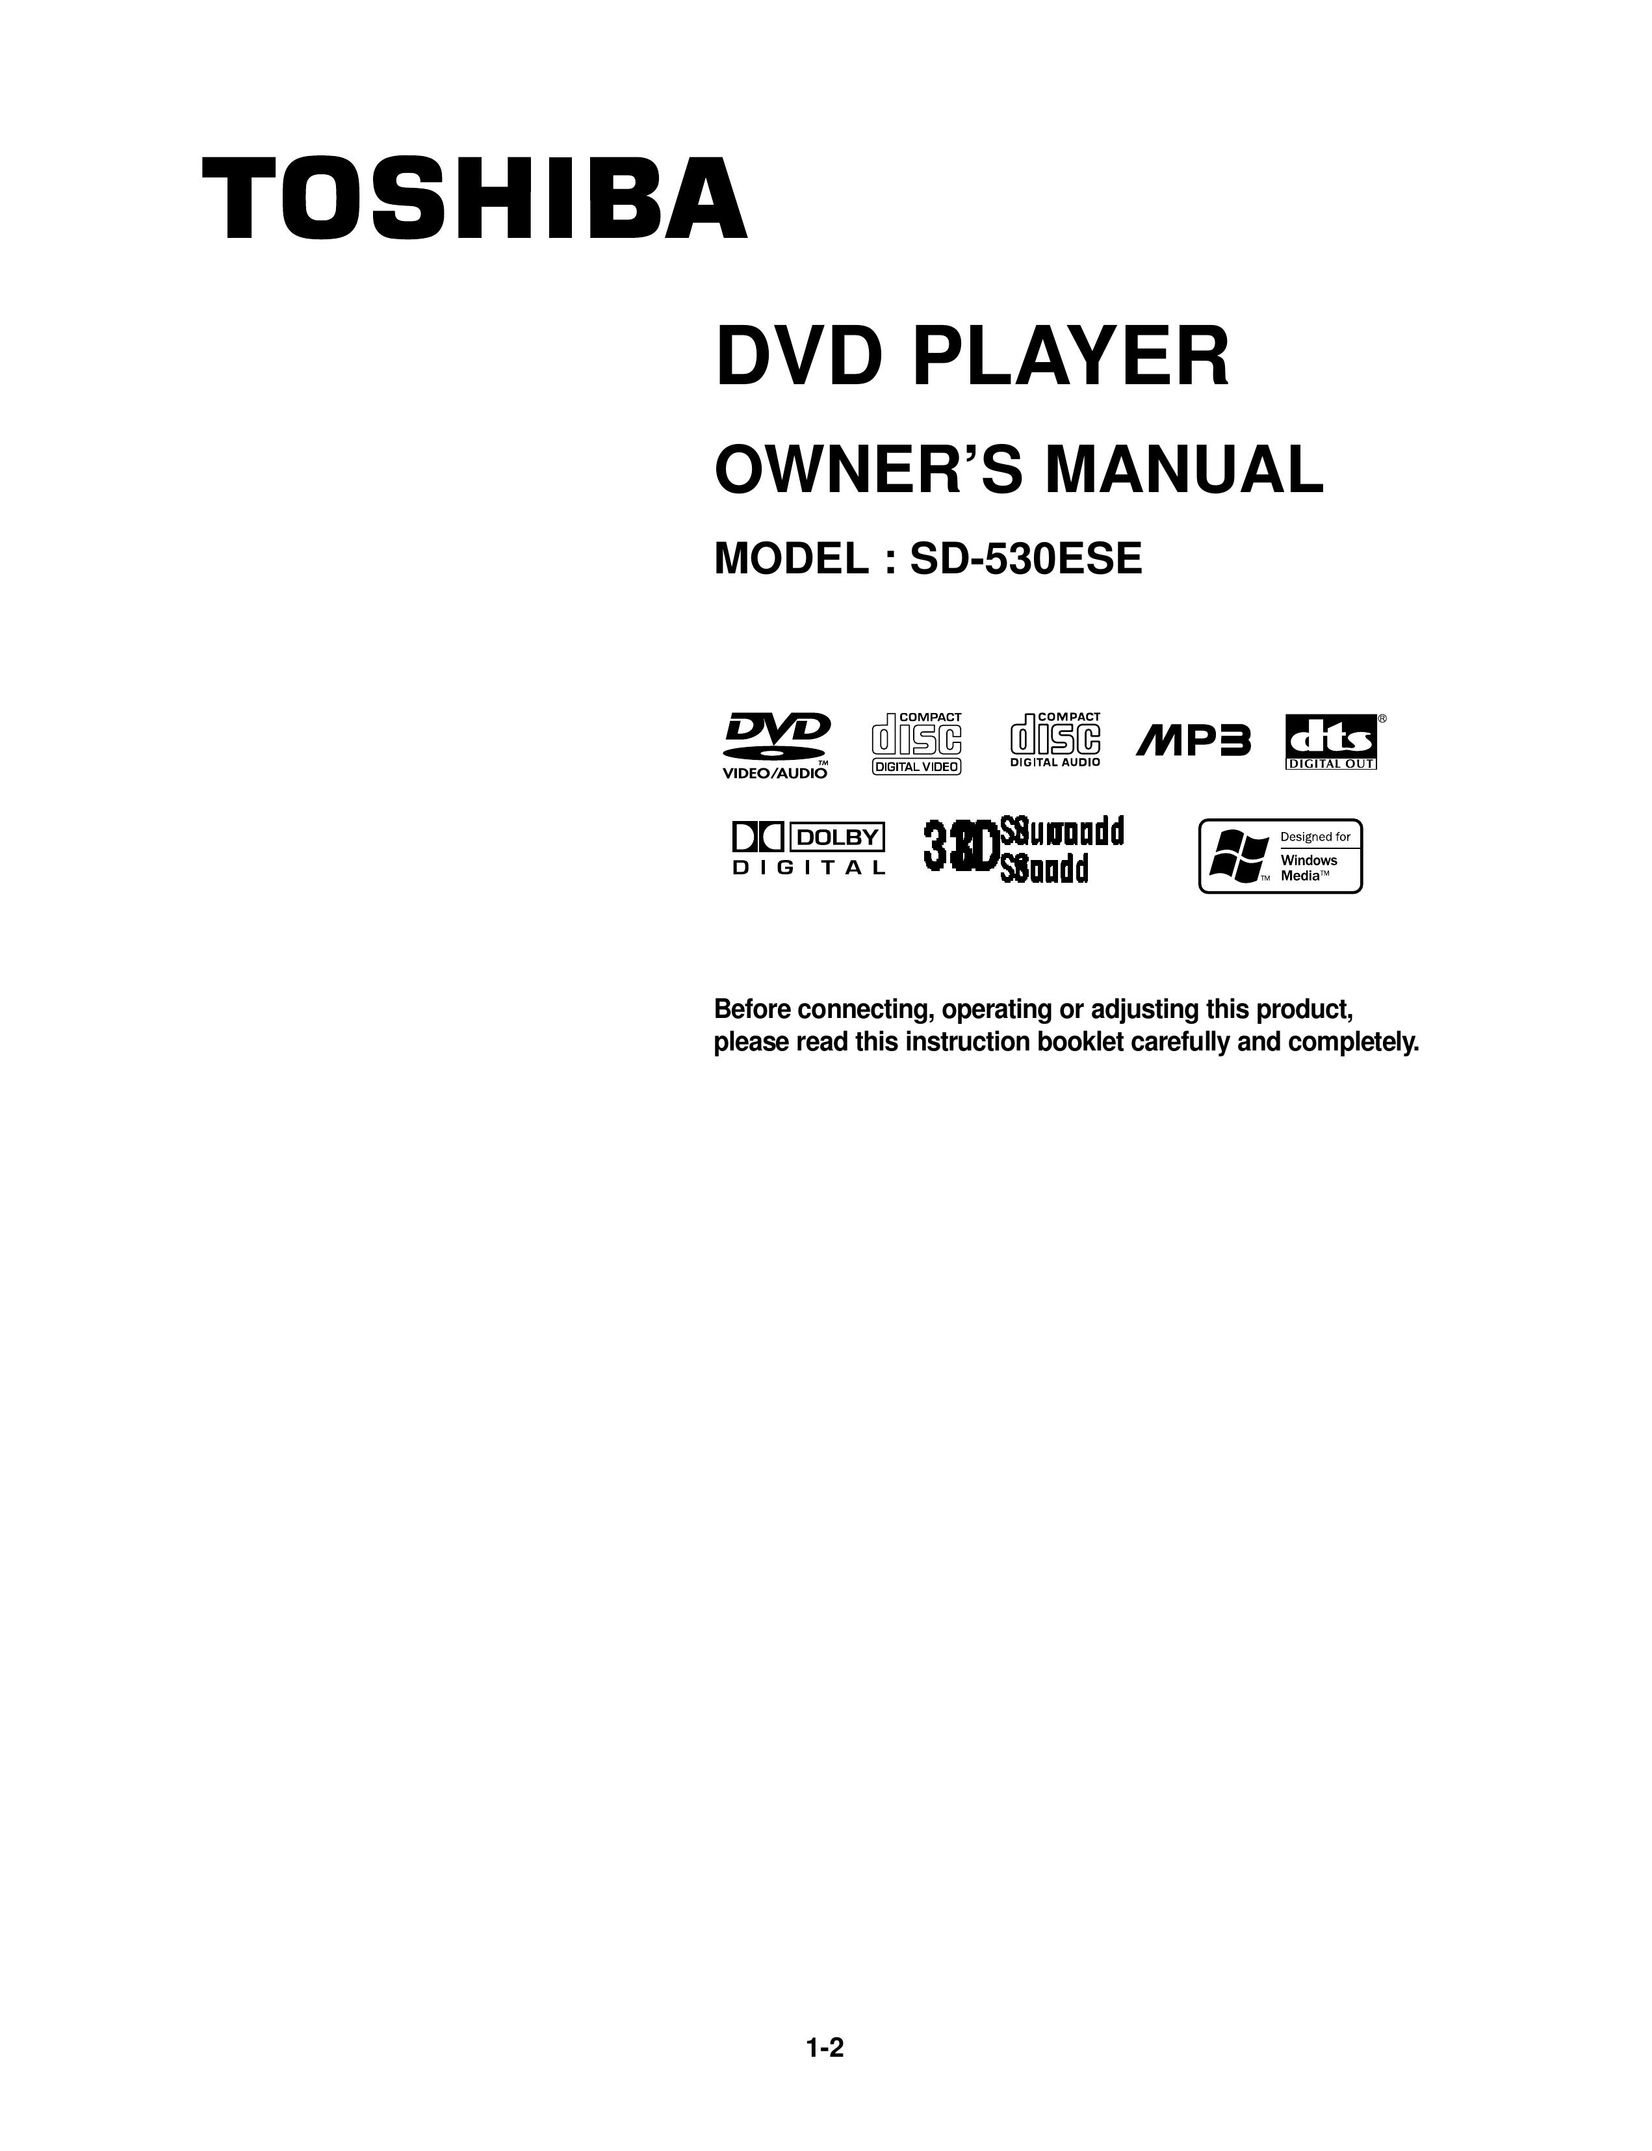 Kodak SD-530ESE DVD Player User Manual